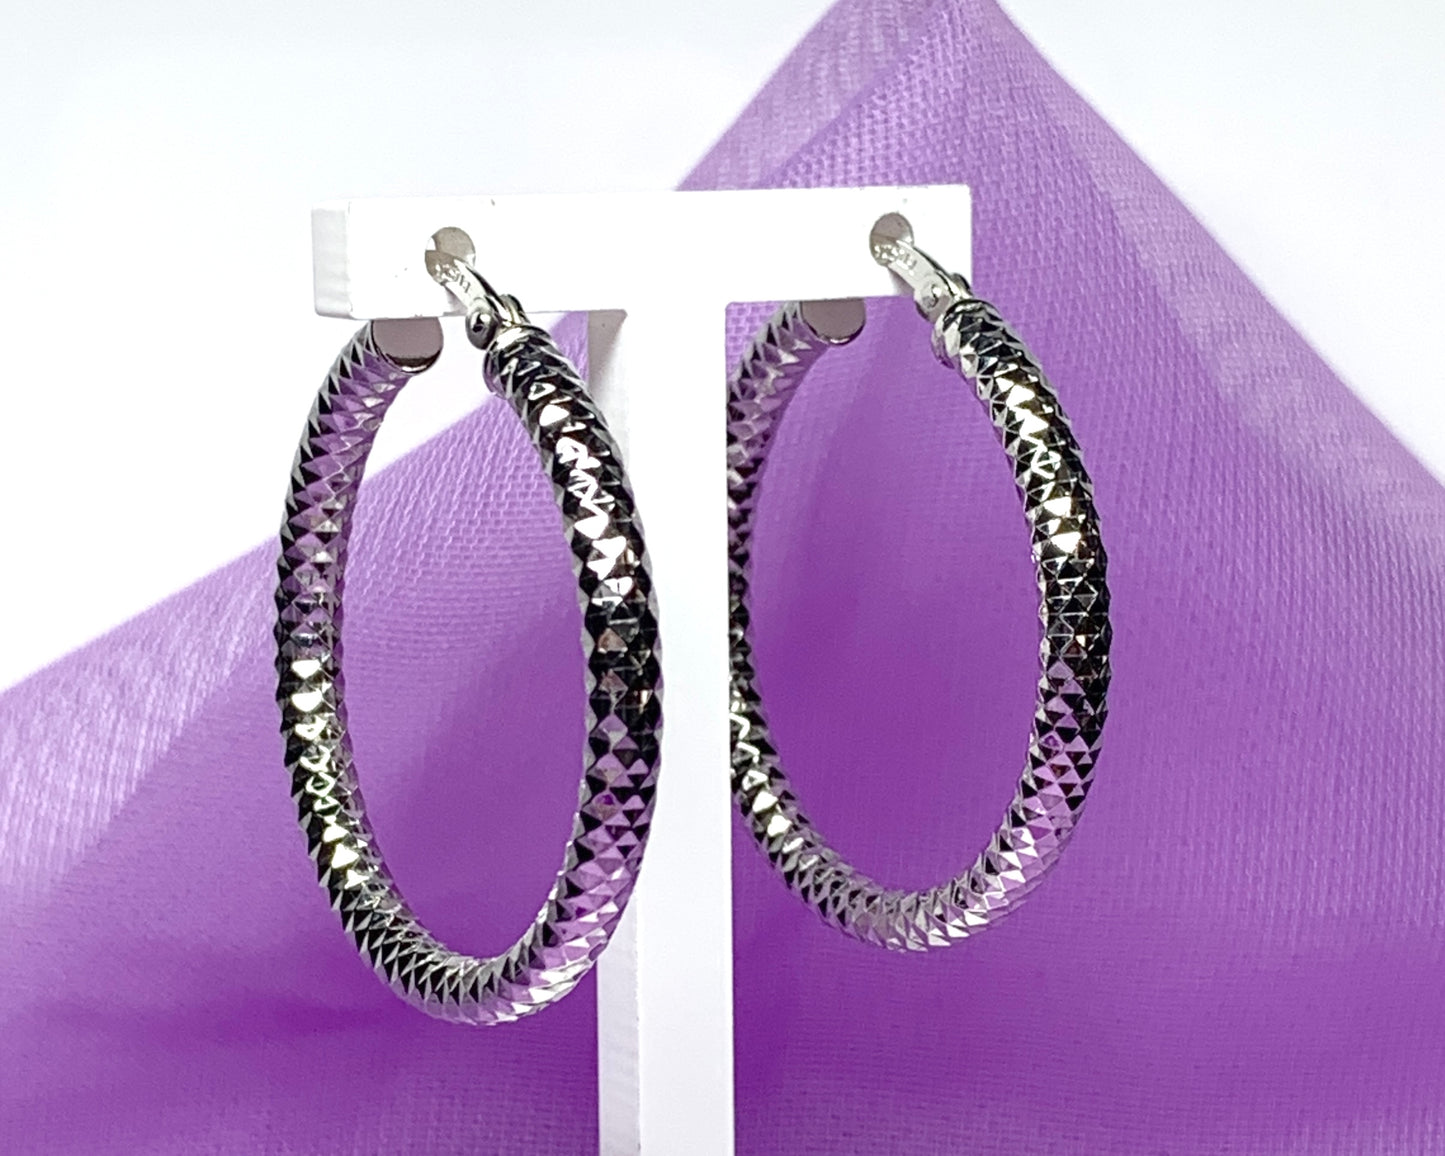 Diamond cut fancy faceted ribbed patterned sterling silver round hoop earrings 30 mm